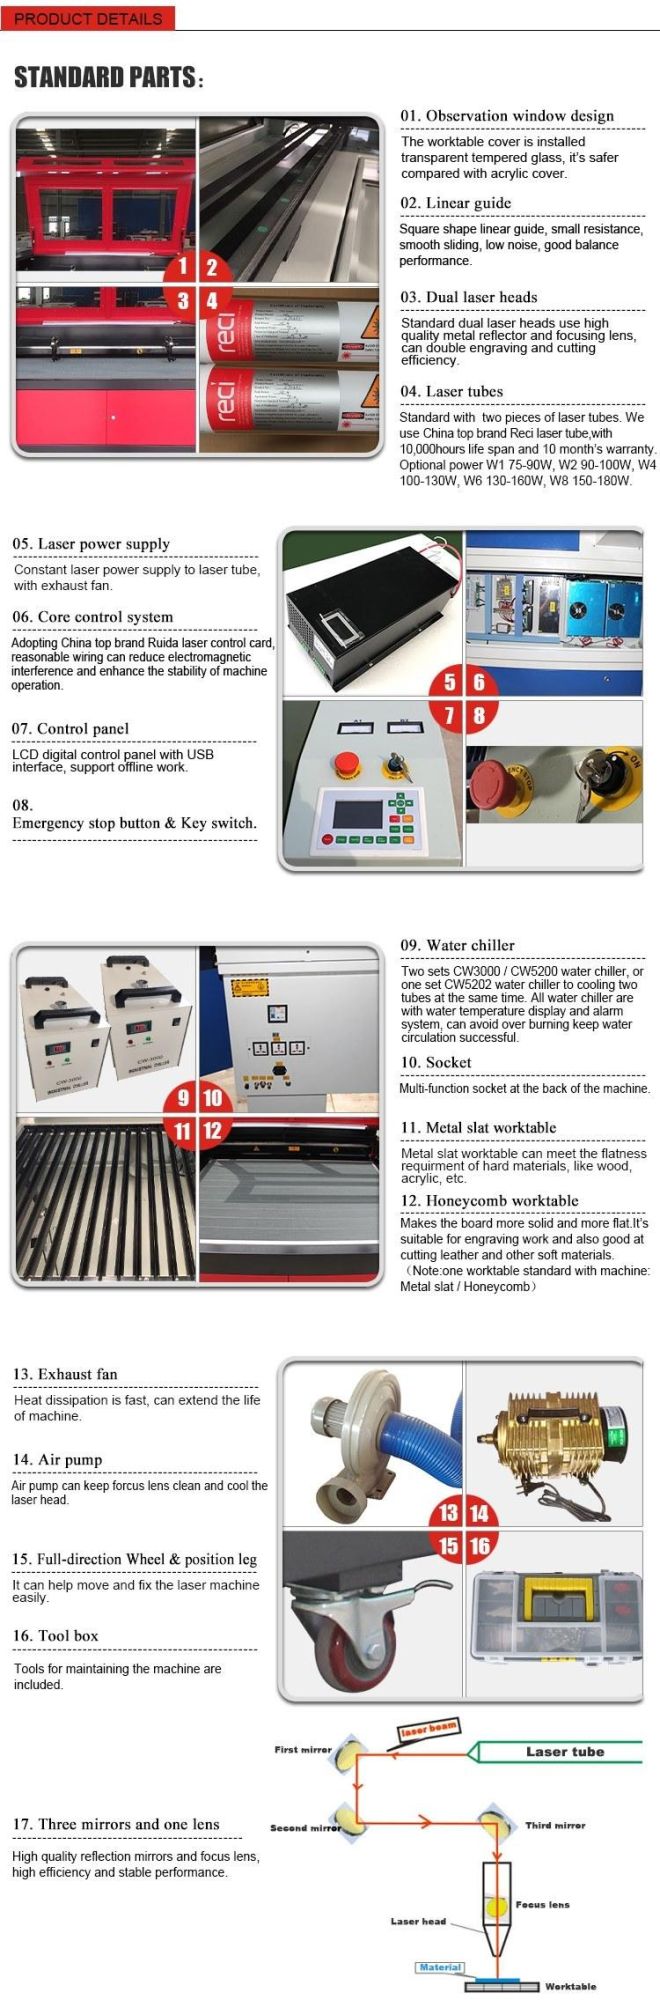 High Quality China 1490 CO2 Laser Engraver Cutting Machine 80W